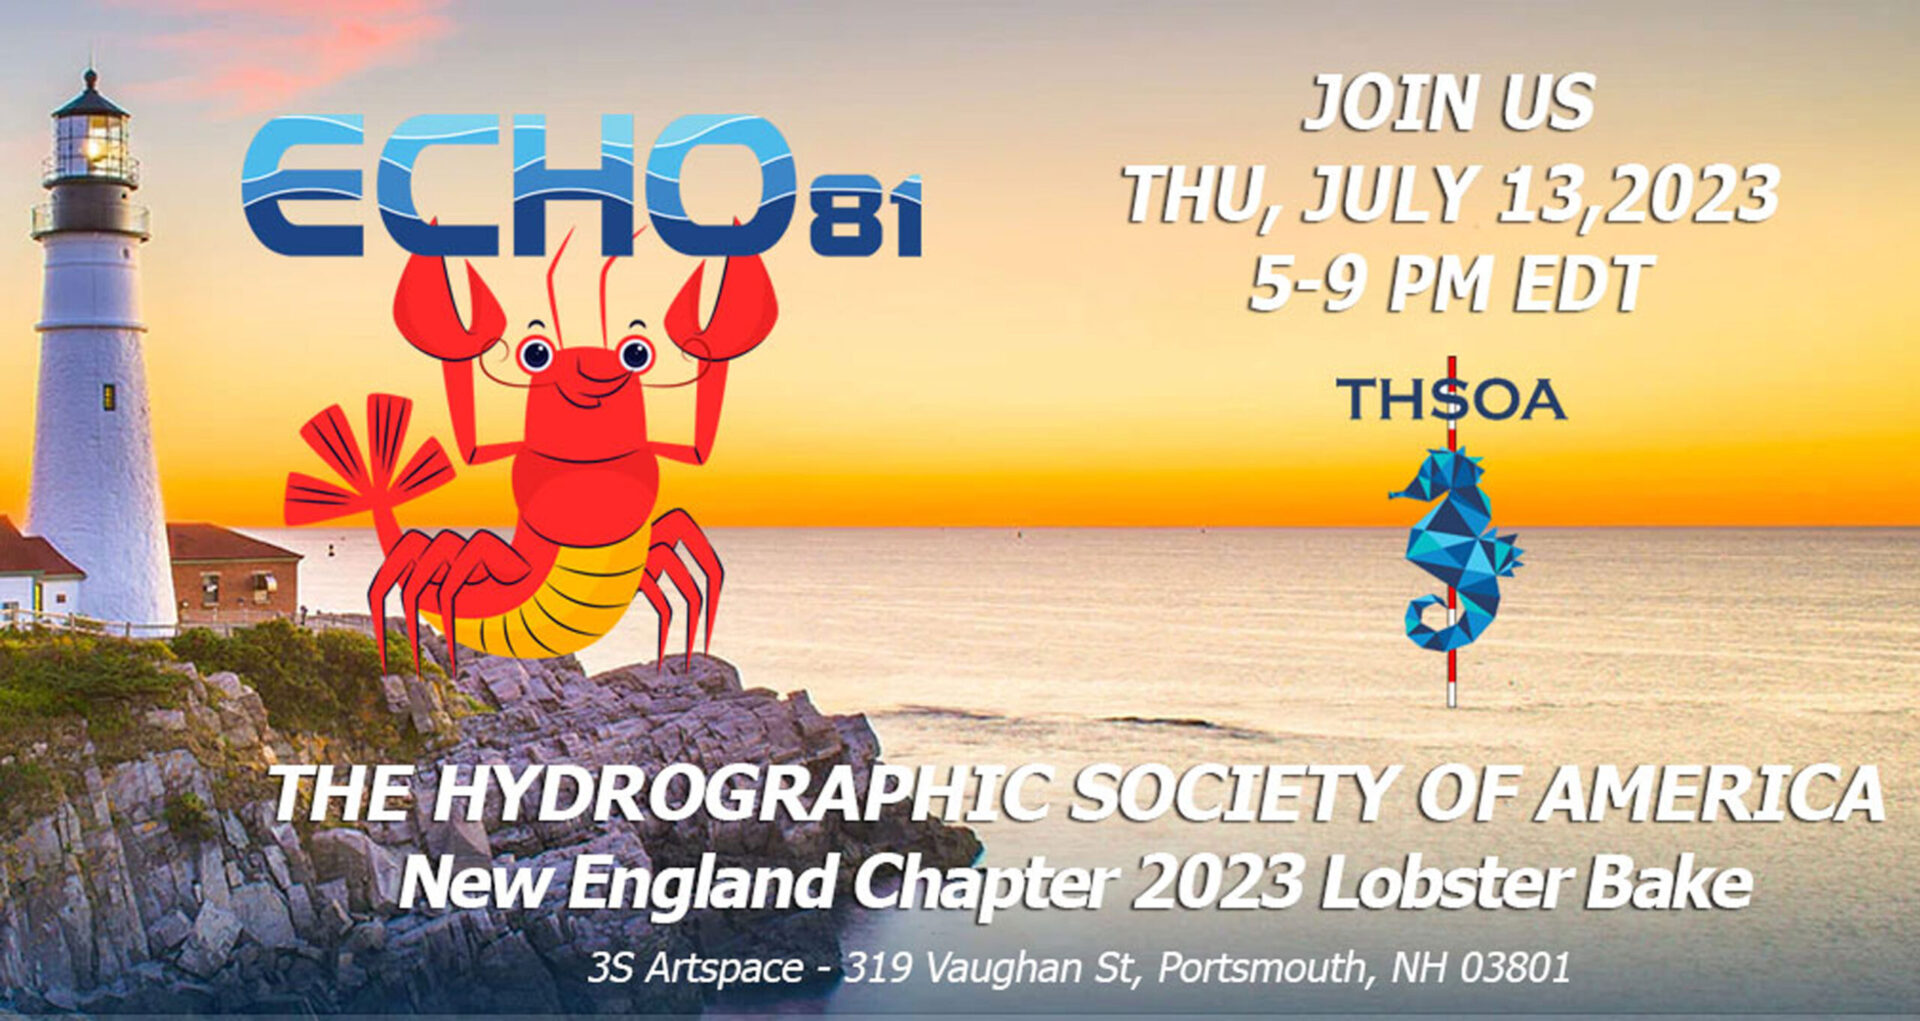 ECHO81 THSOA 2023 ECHO81 is Premier Supplier of Underwater Survey Technologies Rental Sales Training Offshore Hydrography Geophysics.